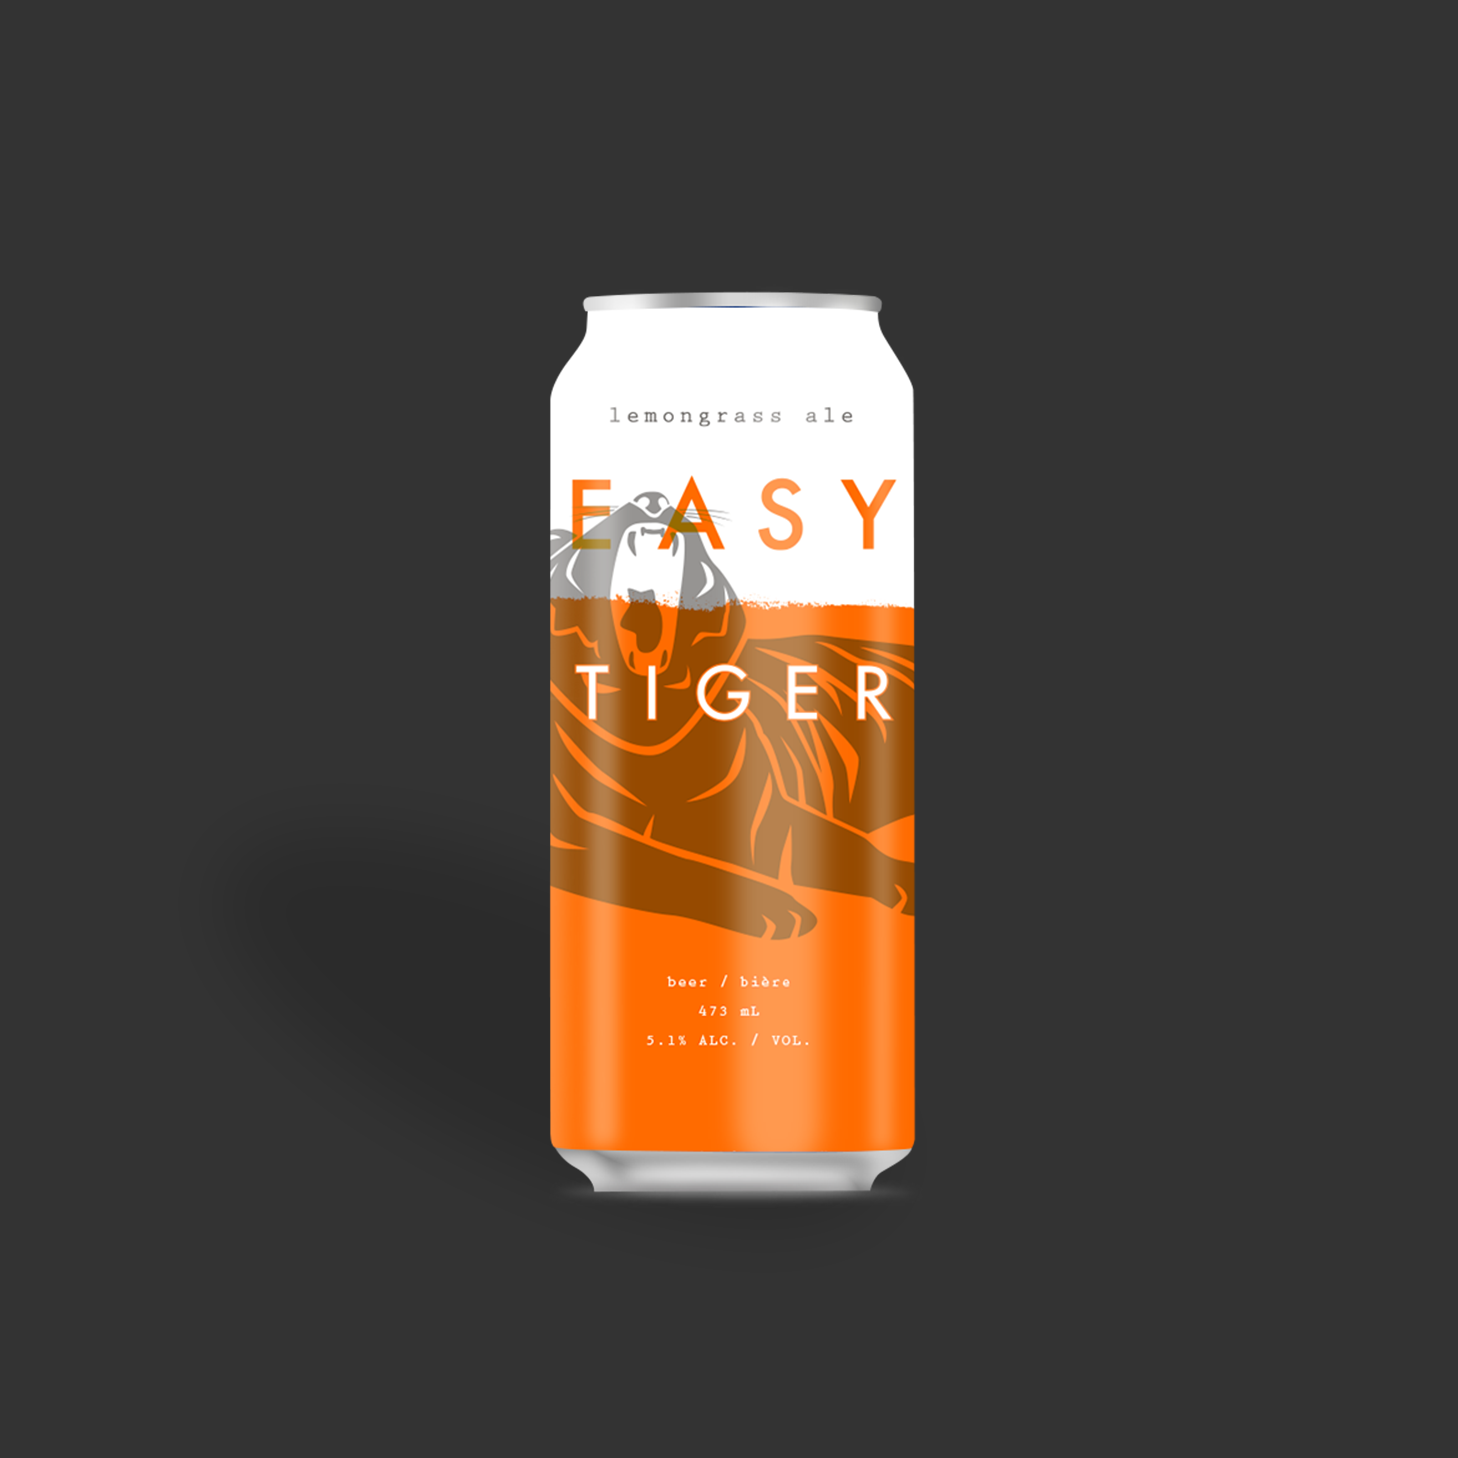 Easy Tiger Lemongrass Ale